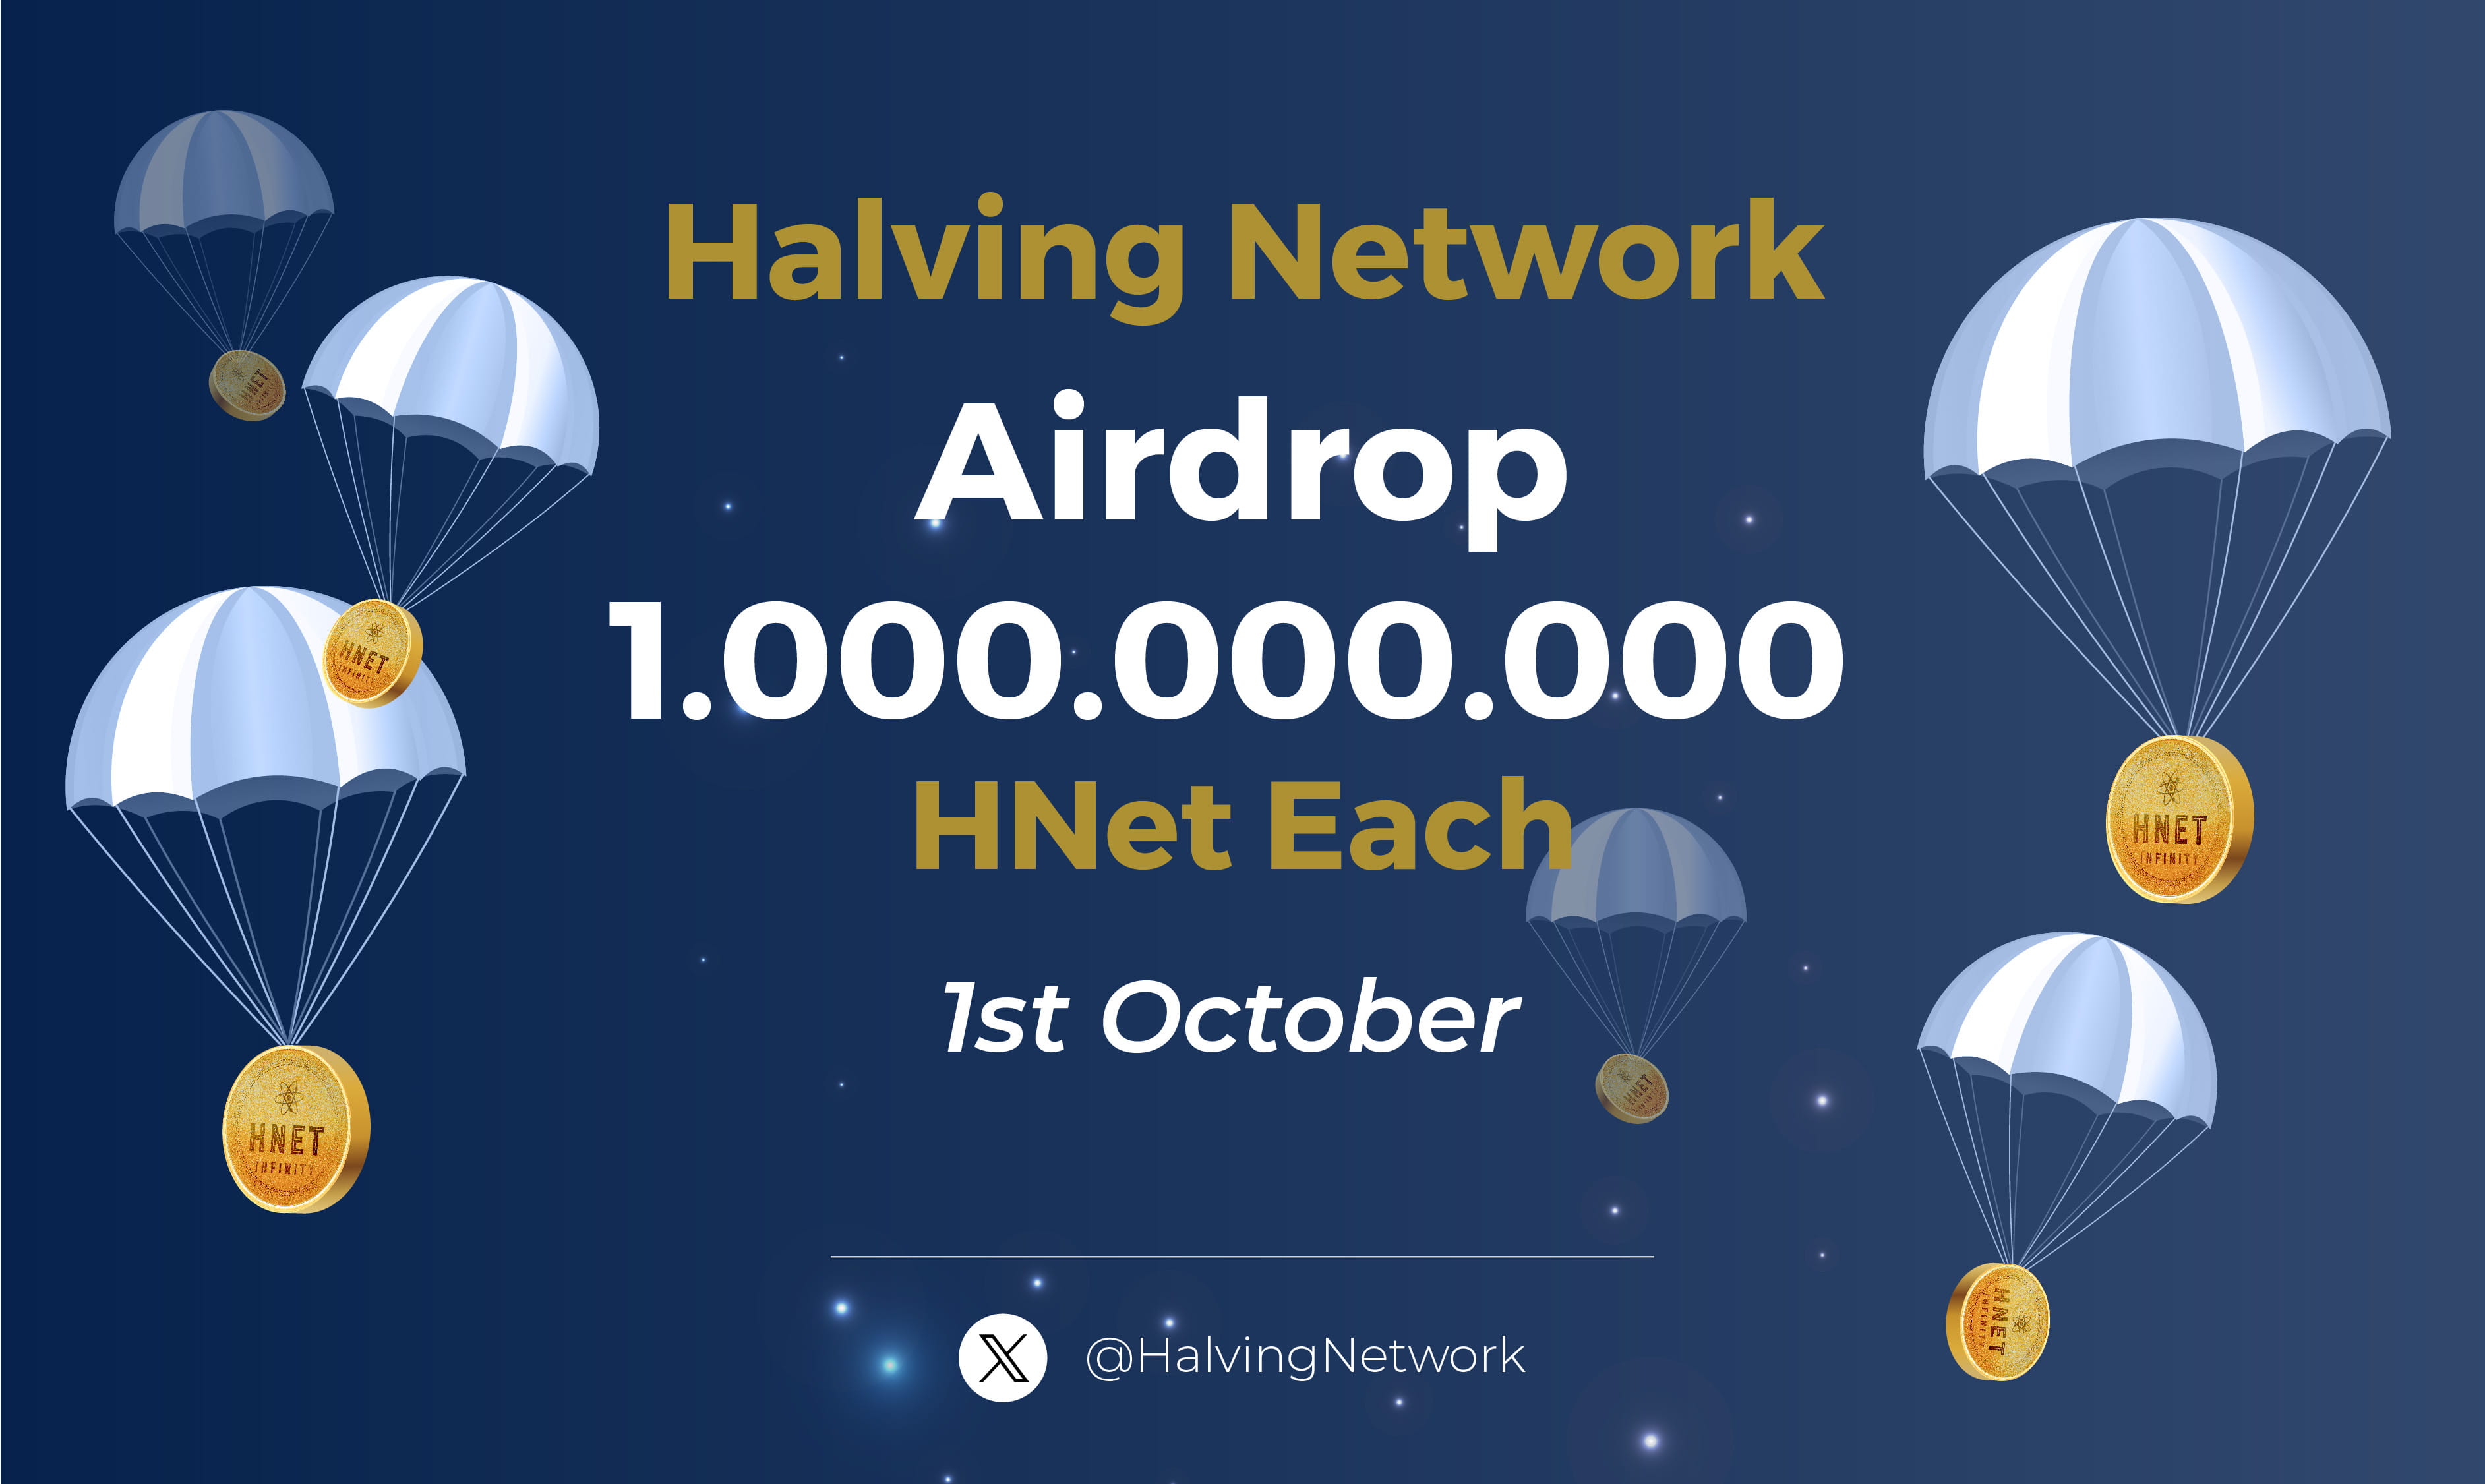 1st October HALVING NETWORK Airdrop 